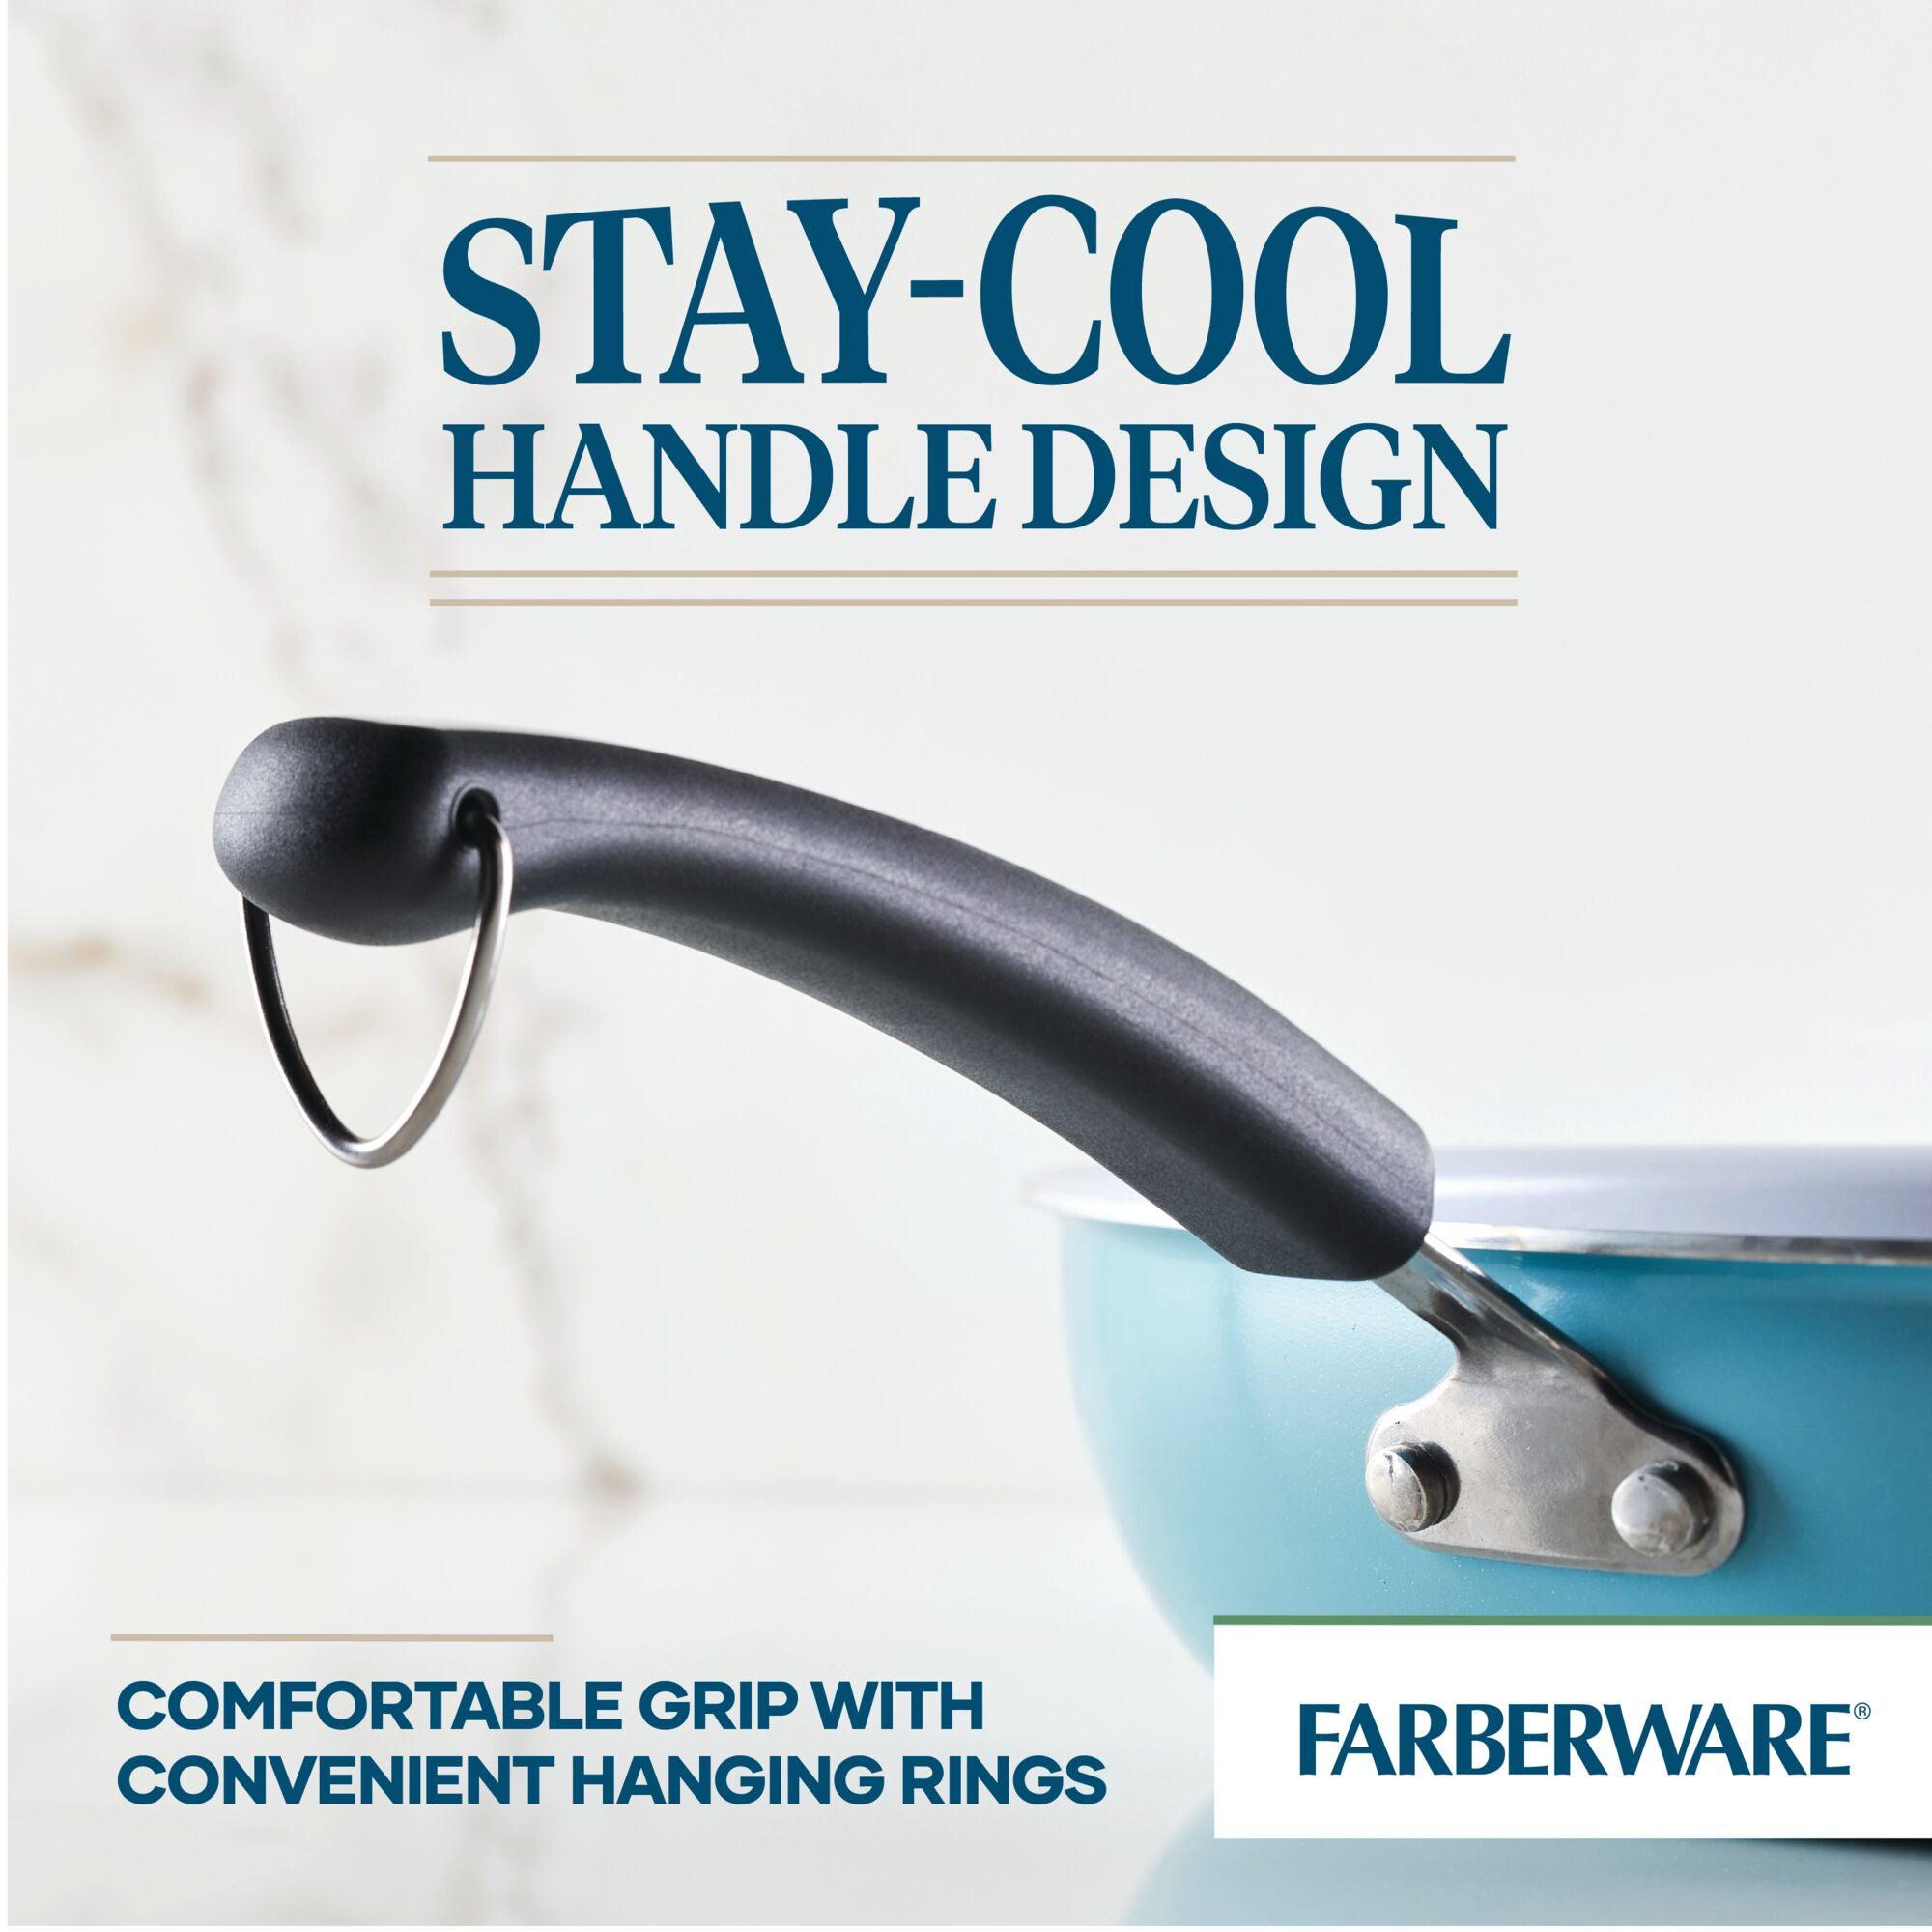 Farberware Eco Advantage 12.5 Nonstick Ceramic Deep Frying Pan with Helper  Handle Aqua